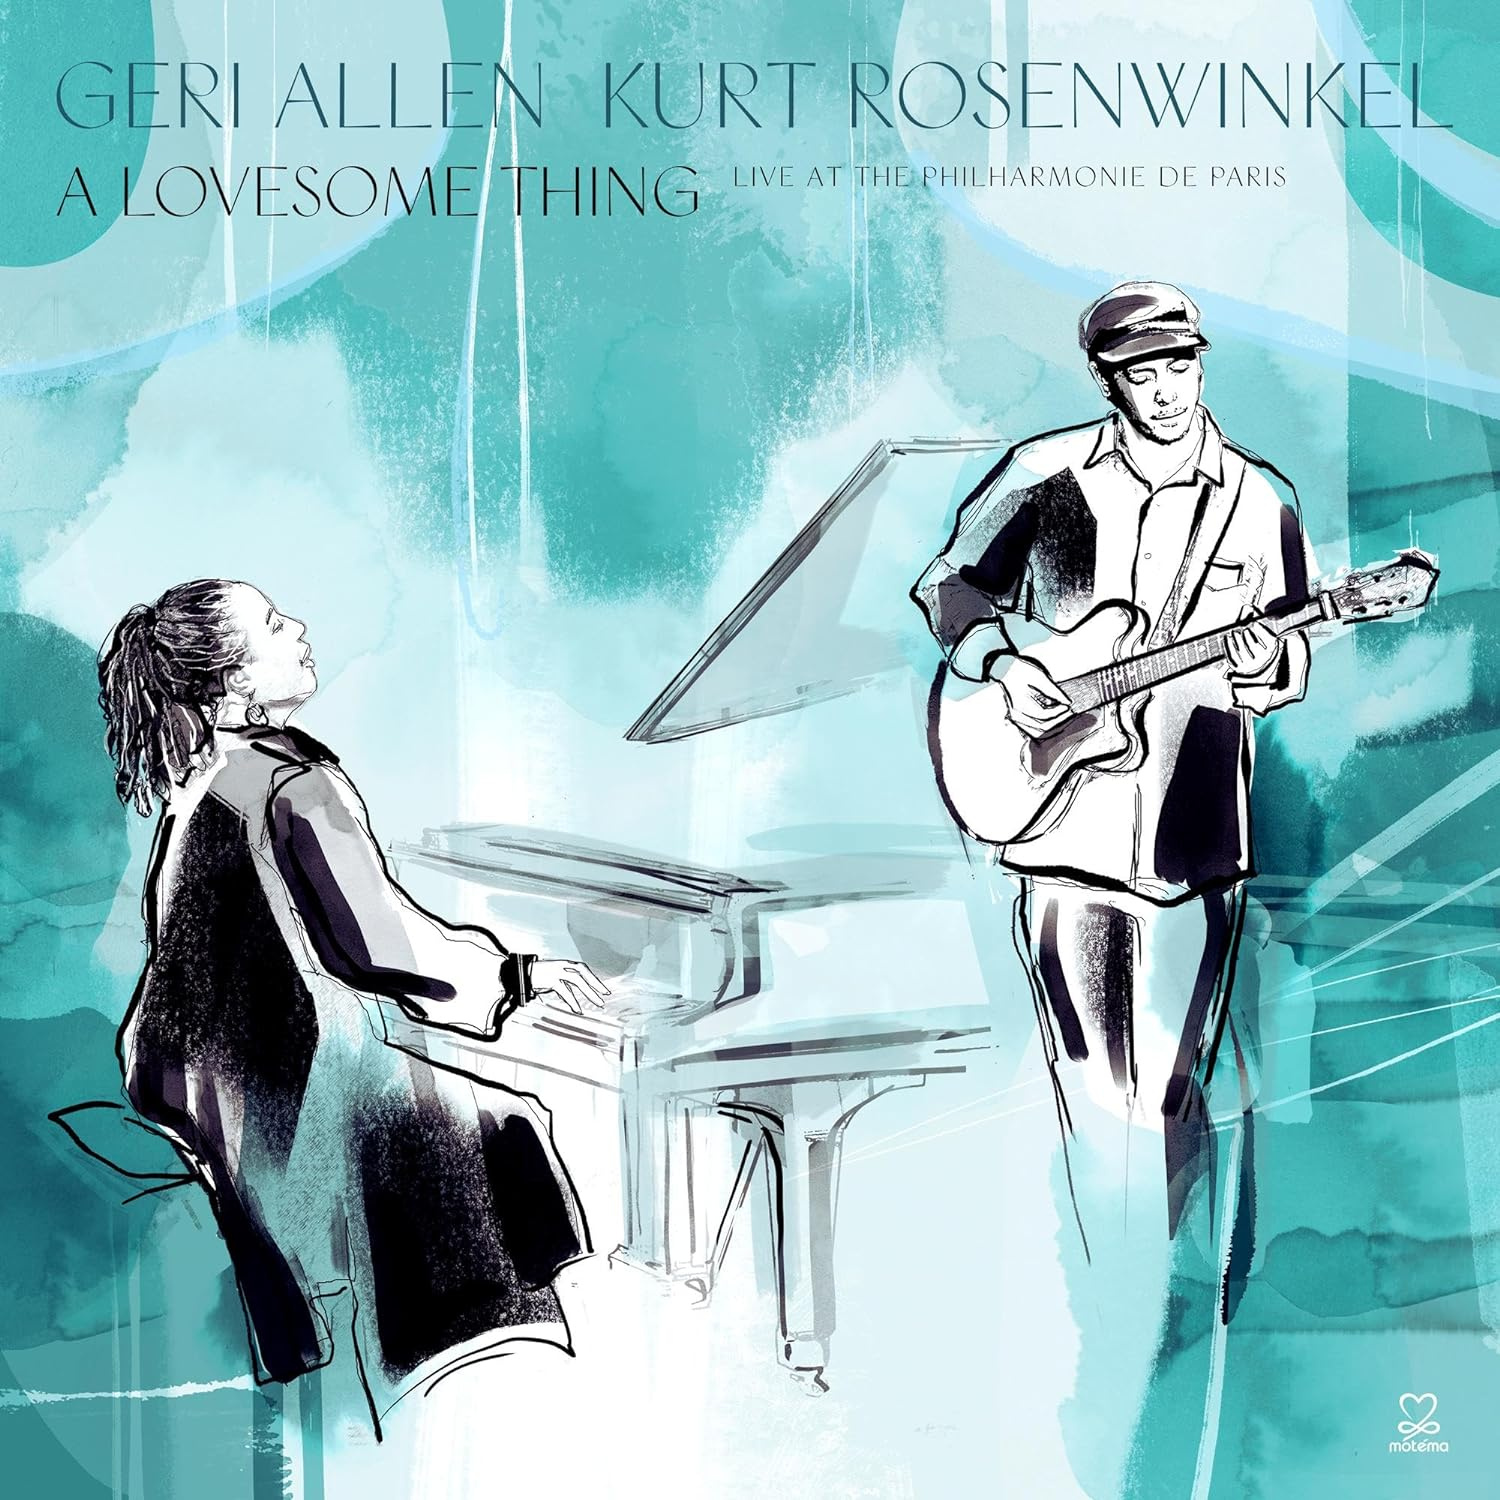 Kurt Rosenwinkel & Geri Allen - A Lovesome Thing vinyl cover